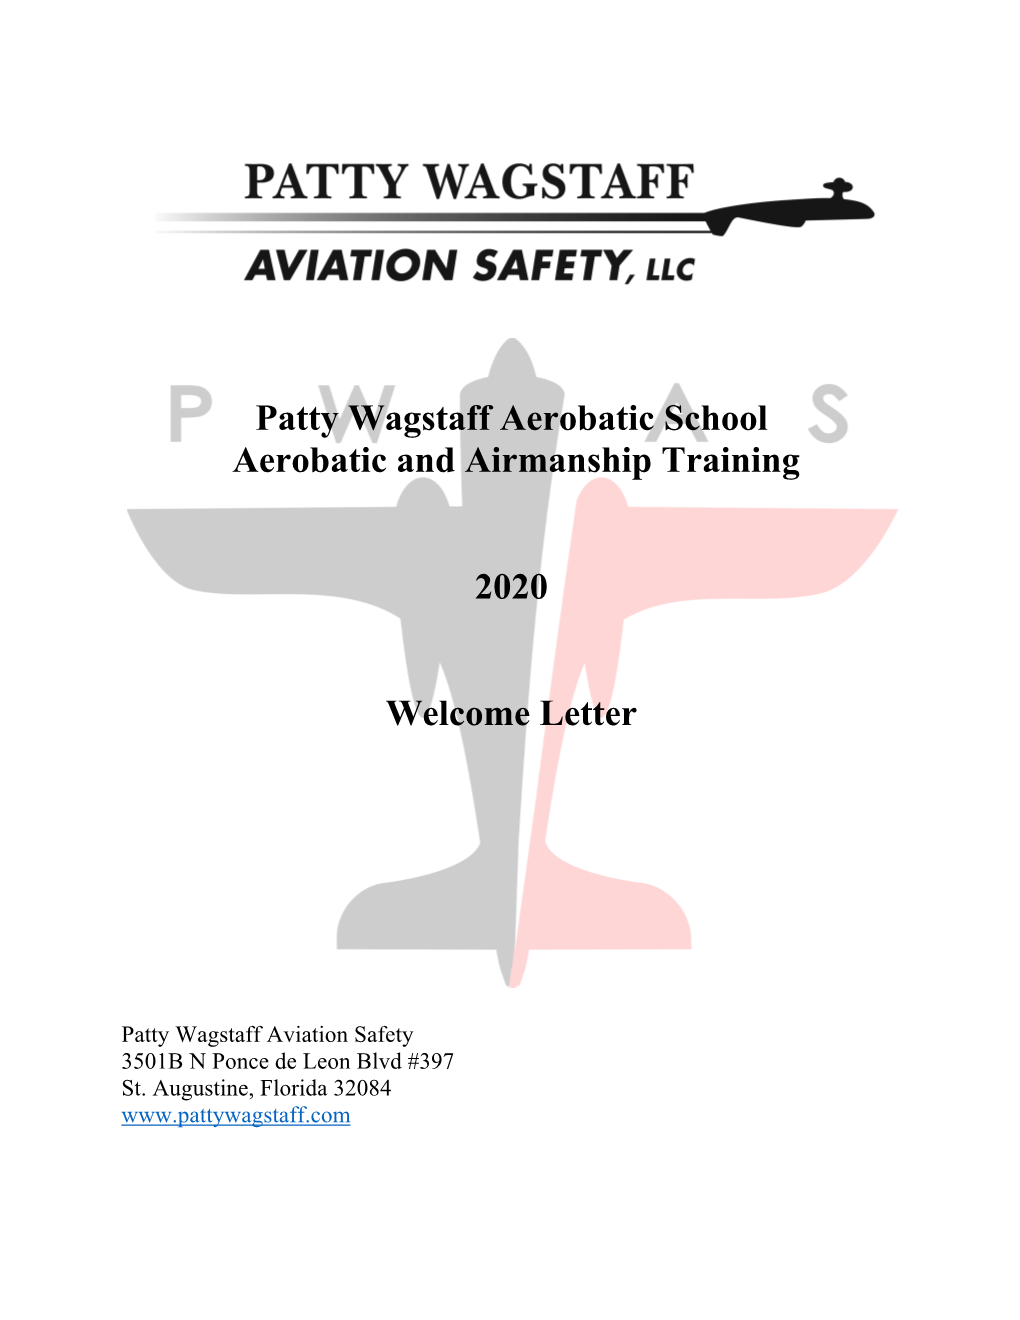 Patty Wagstaff Aerobatic School Aerobatic and Airmanship Training